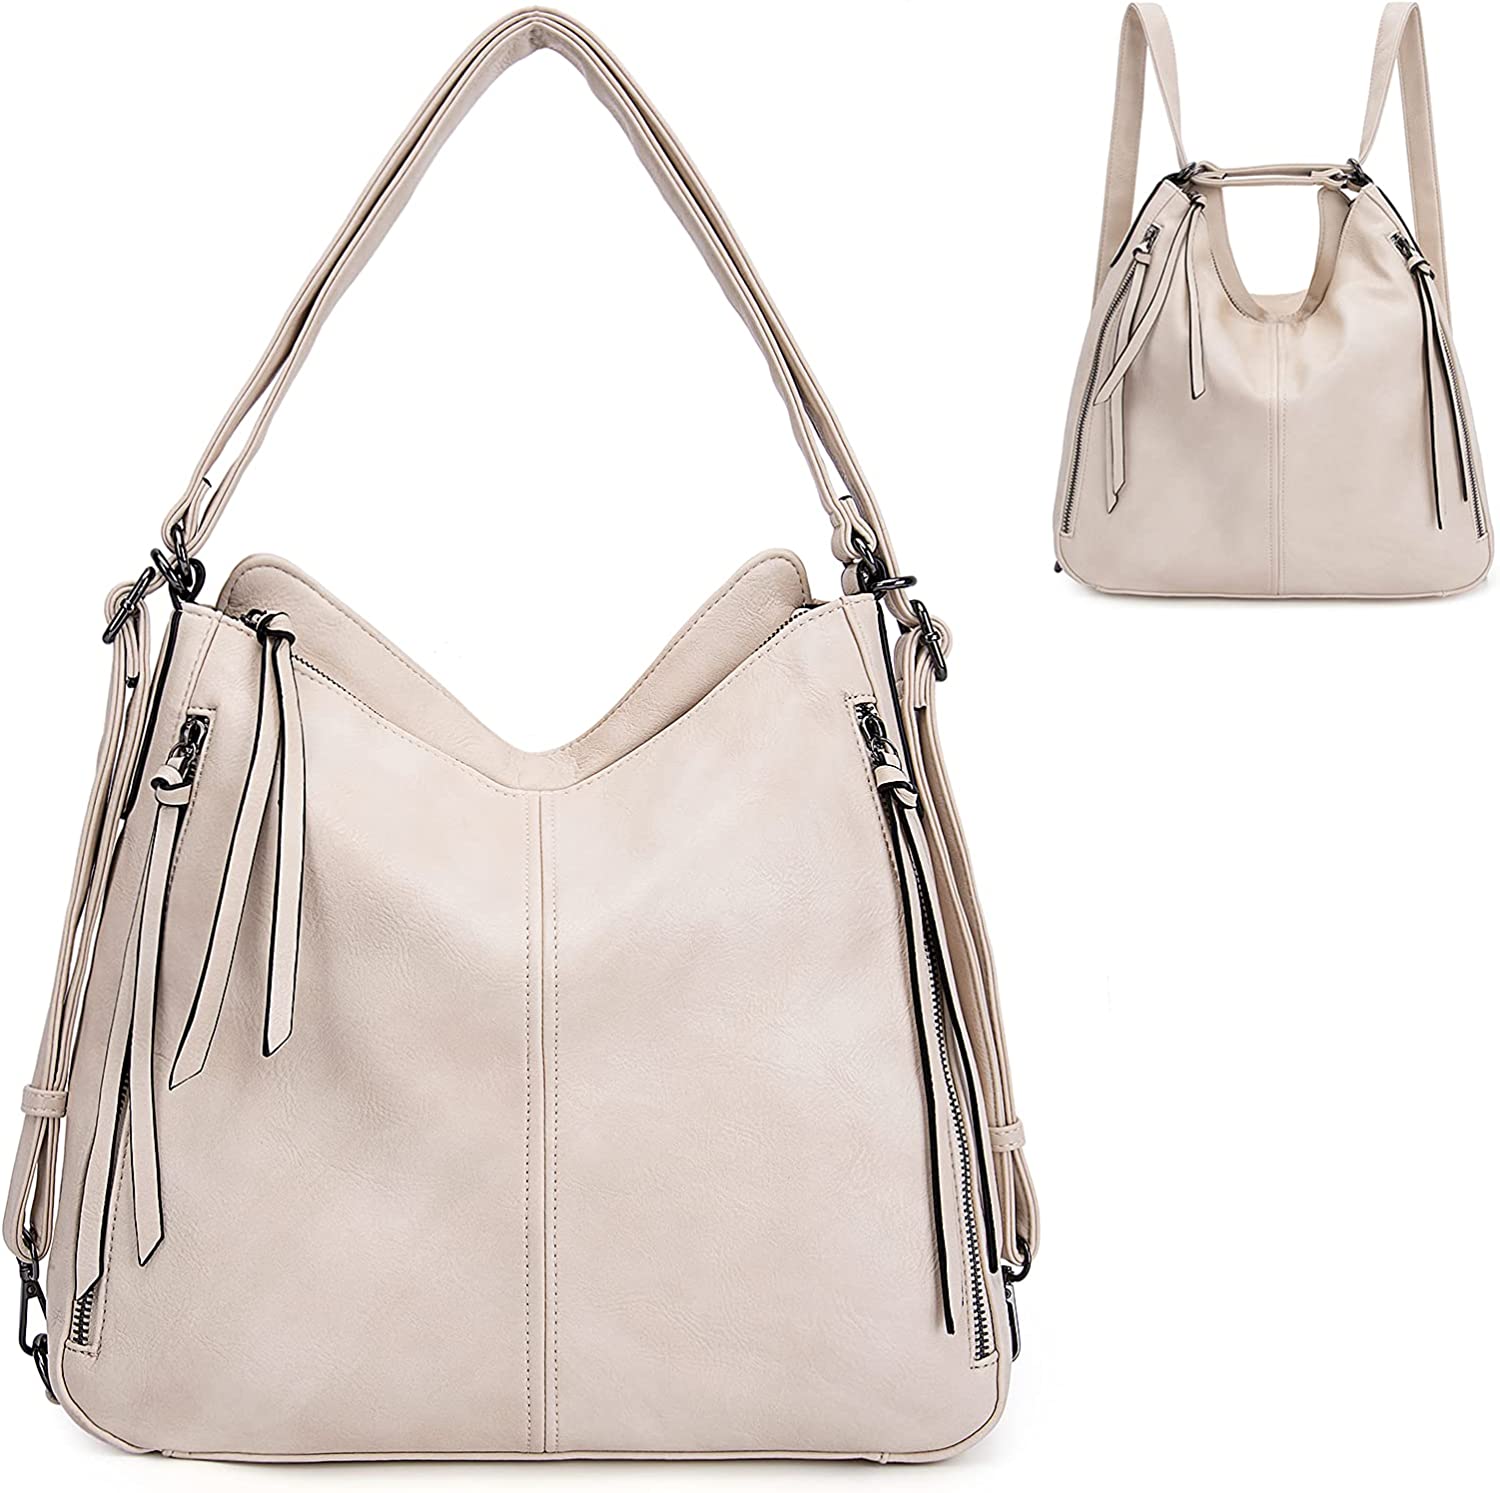 Convertible Backpack Purse For Women Handbag Hobo Tote Satchel Shoulder Bag  Black : Buy Online at Best Price in KSA - Souq is now Amazon.sa: Fashion